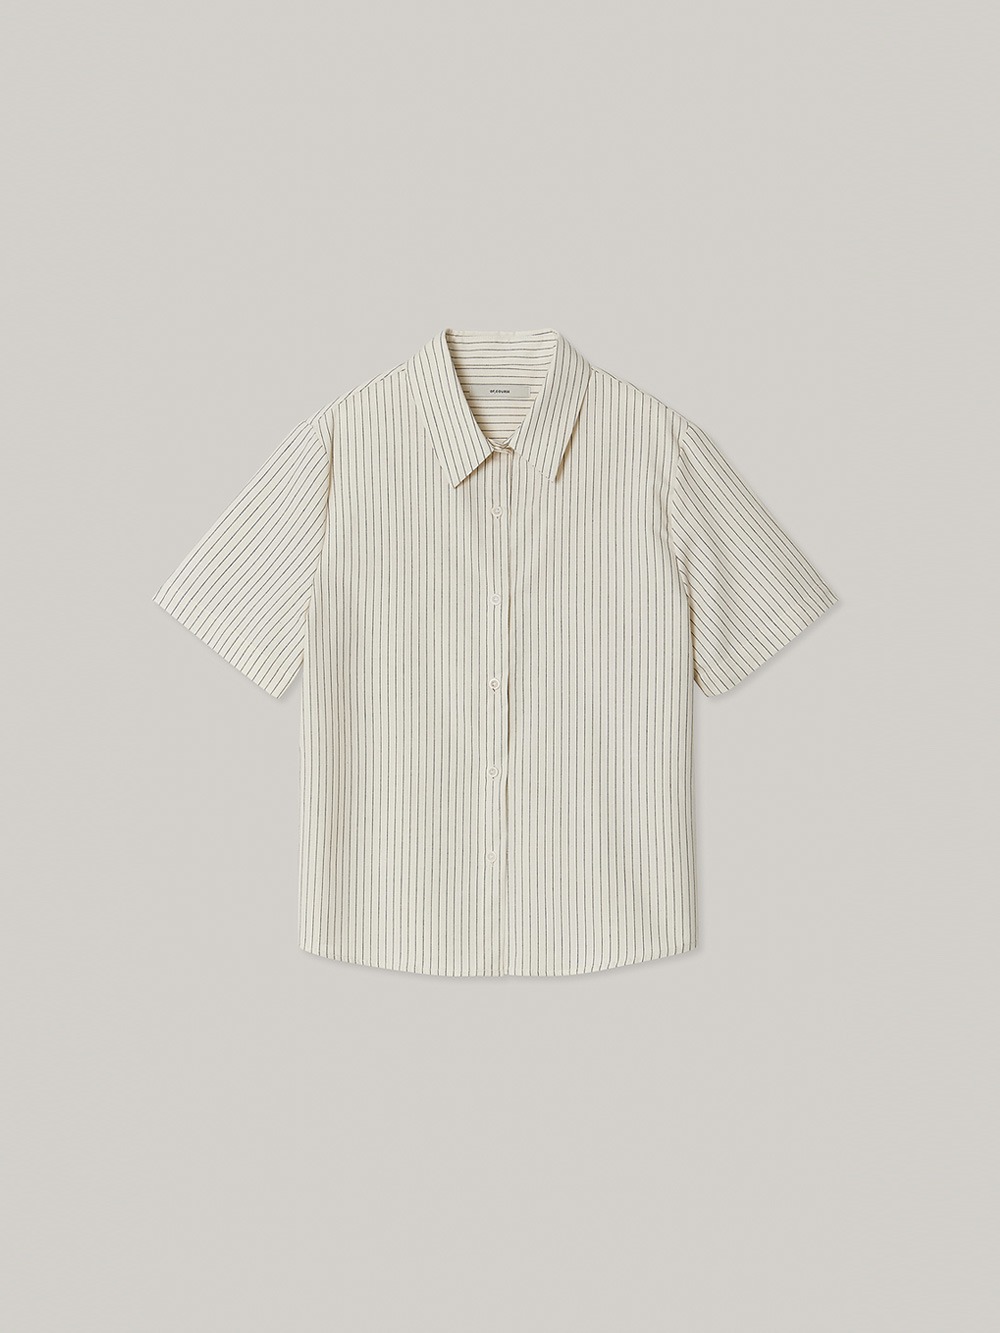 Pin Stripe Shirt (cream)